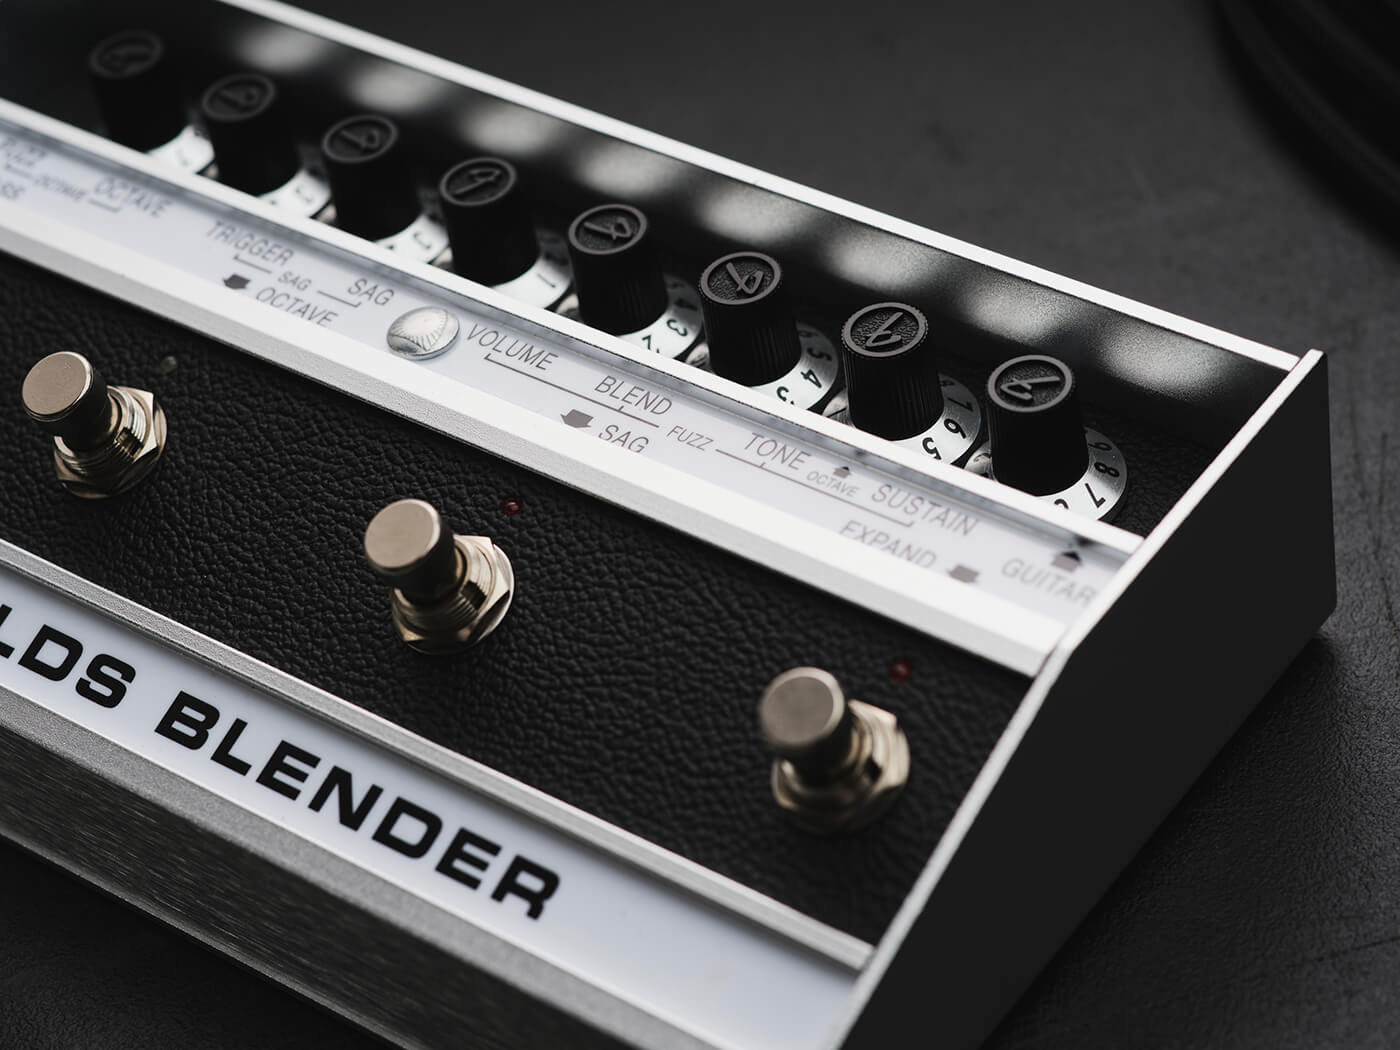 Fender Shields Blender by Adam Gasson